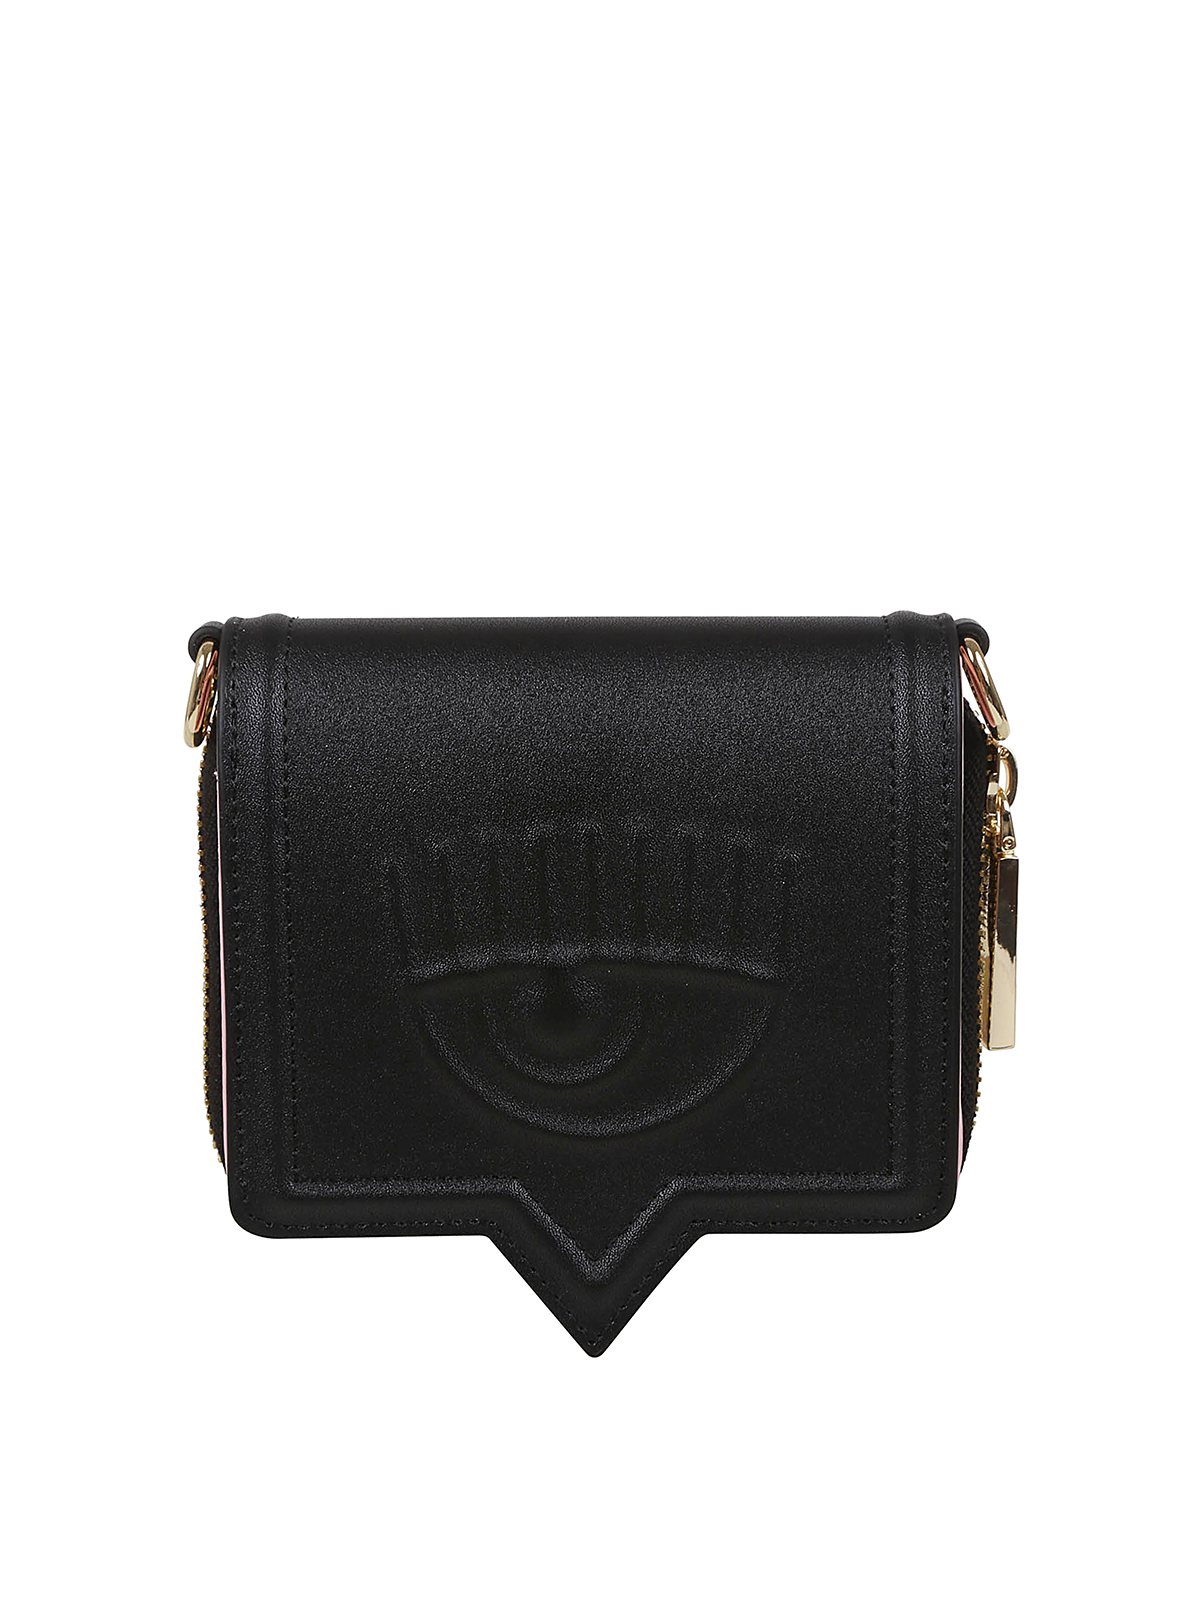 CHIARA FERRAGNI: wallet with Eyelike logo - Black